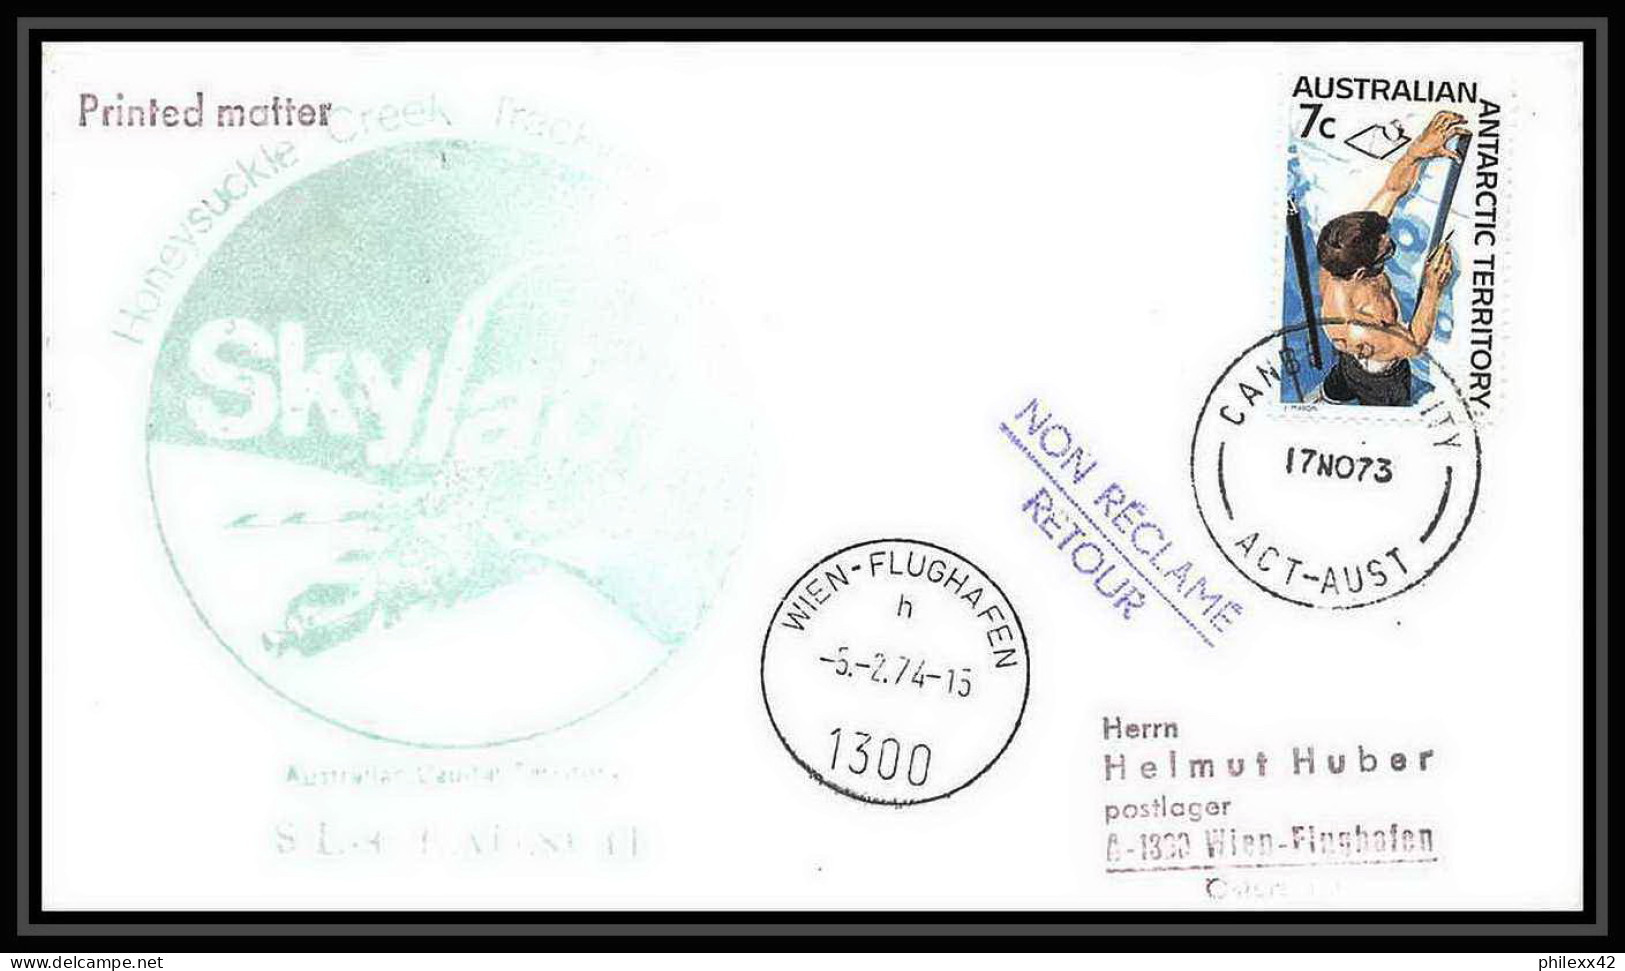 7106/ Espace (space Raumfahrt) Lettre (cover Briefe) 17/11/1973 Skylab 4 Australian Antarctic Territory - Oceania